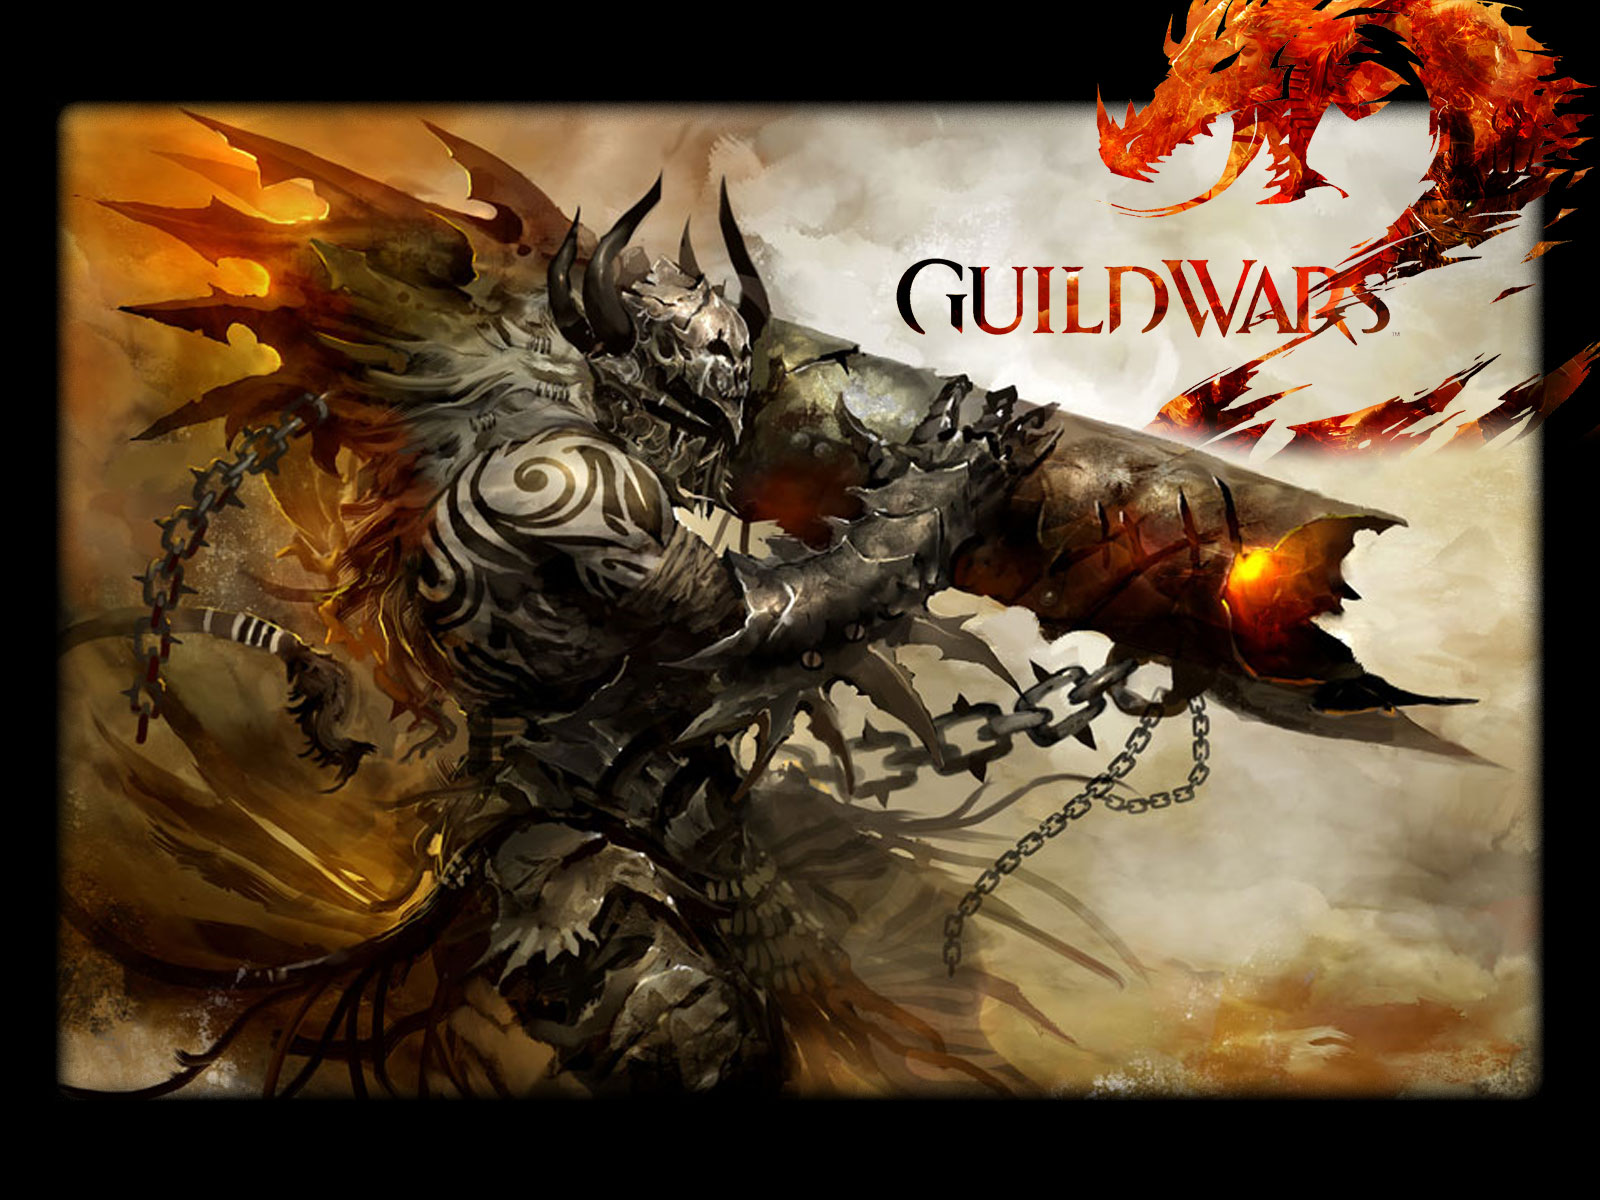 guild wars 2 wallpaper,cg artwork,fictional character,demon,illustration,dragon